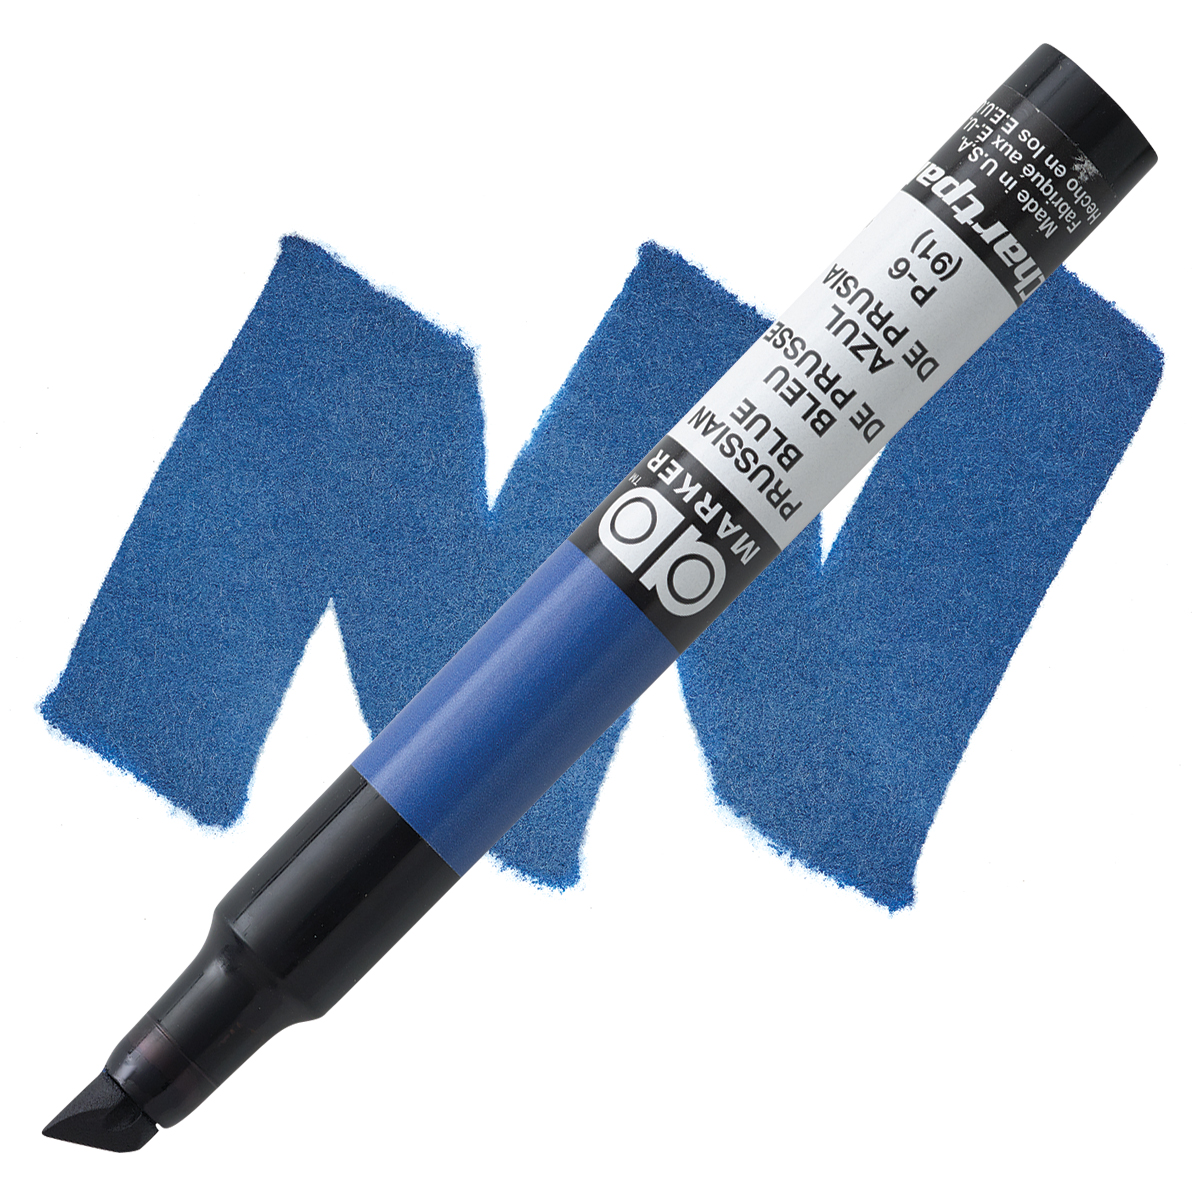 Chartpak Fine Tip Ad Marker - Prussian Blue, BLICK Art Materials